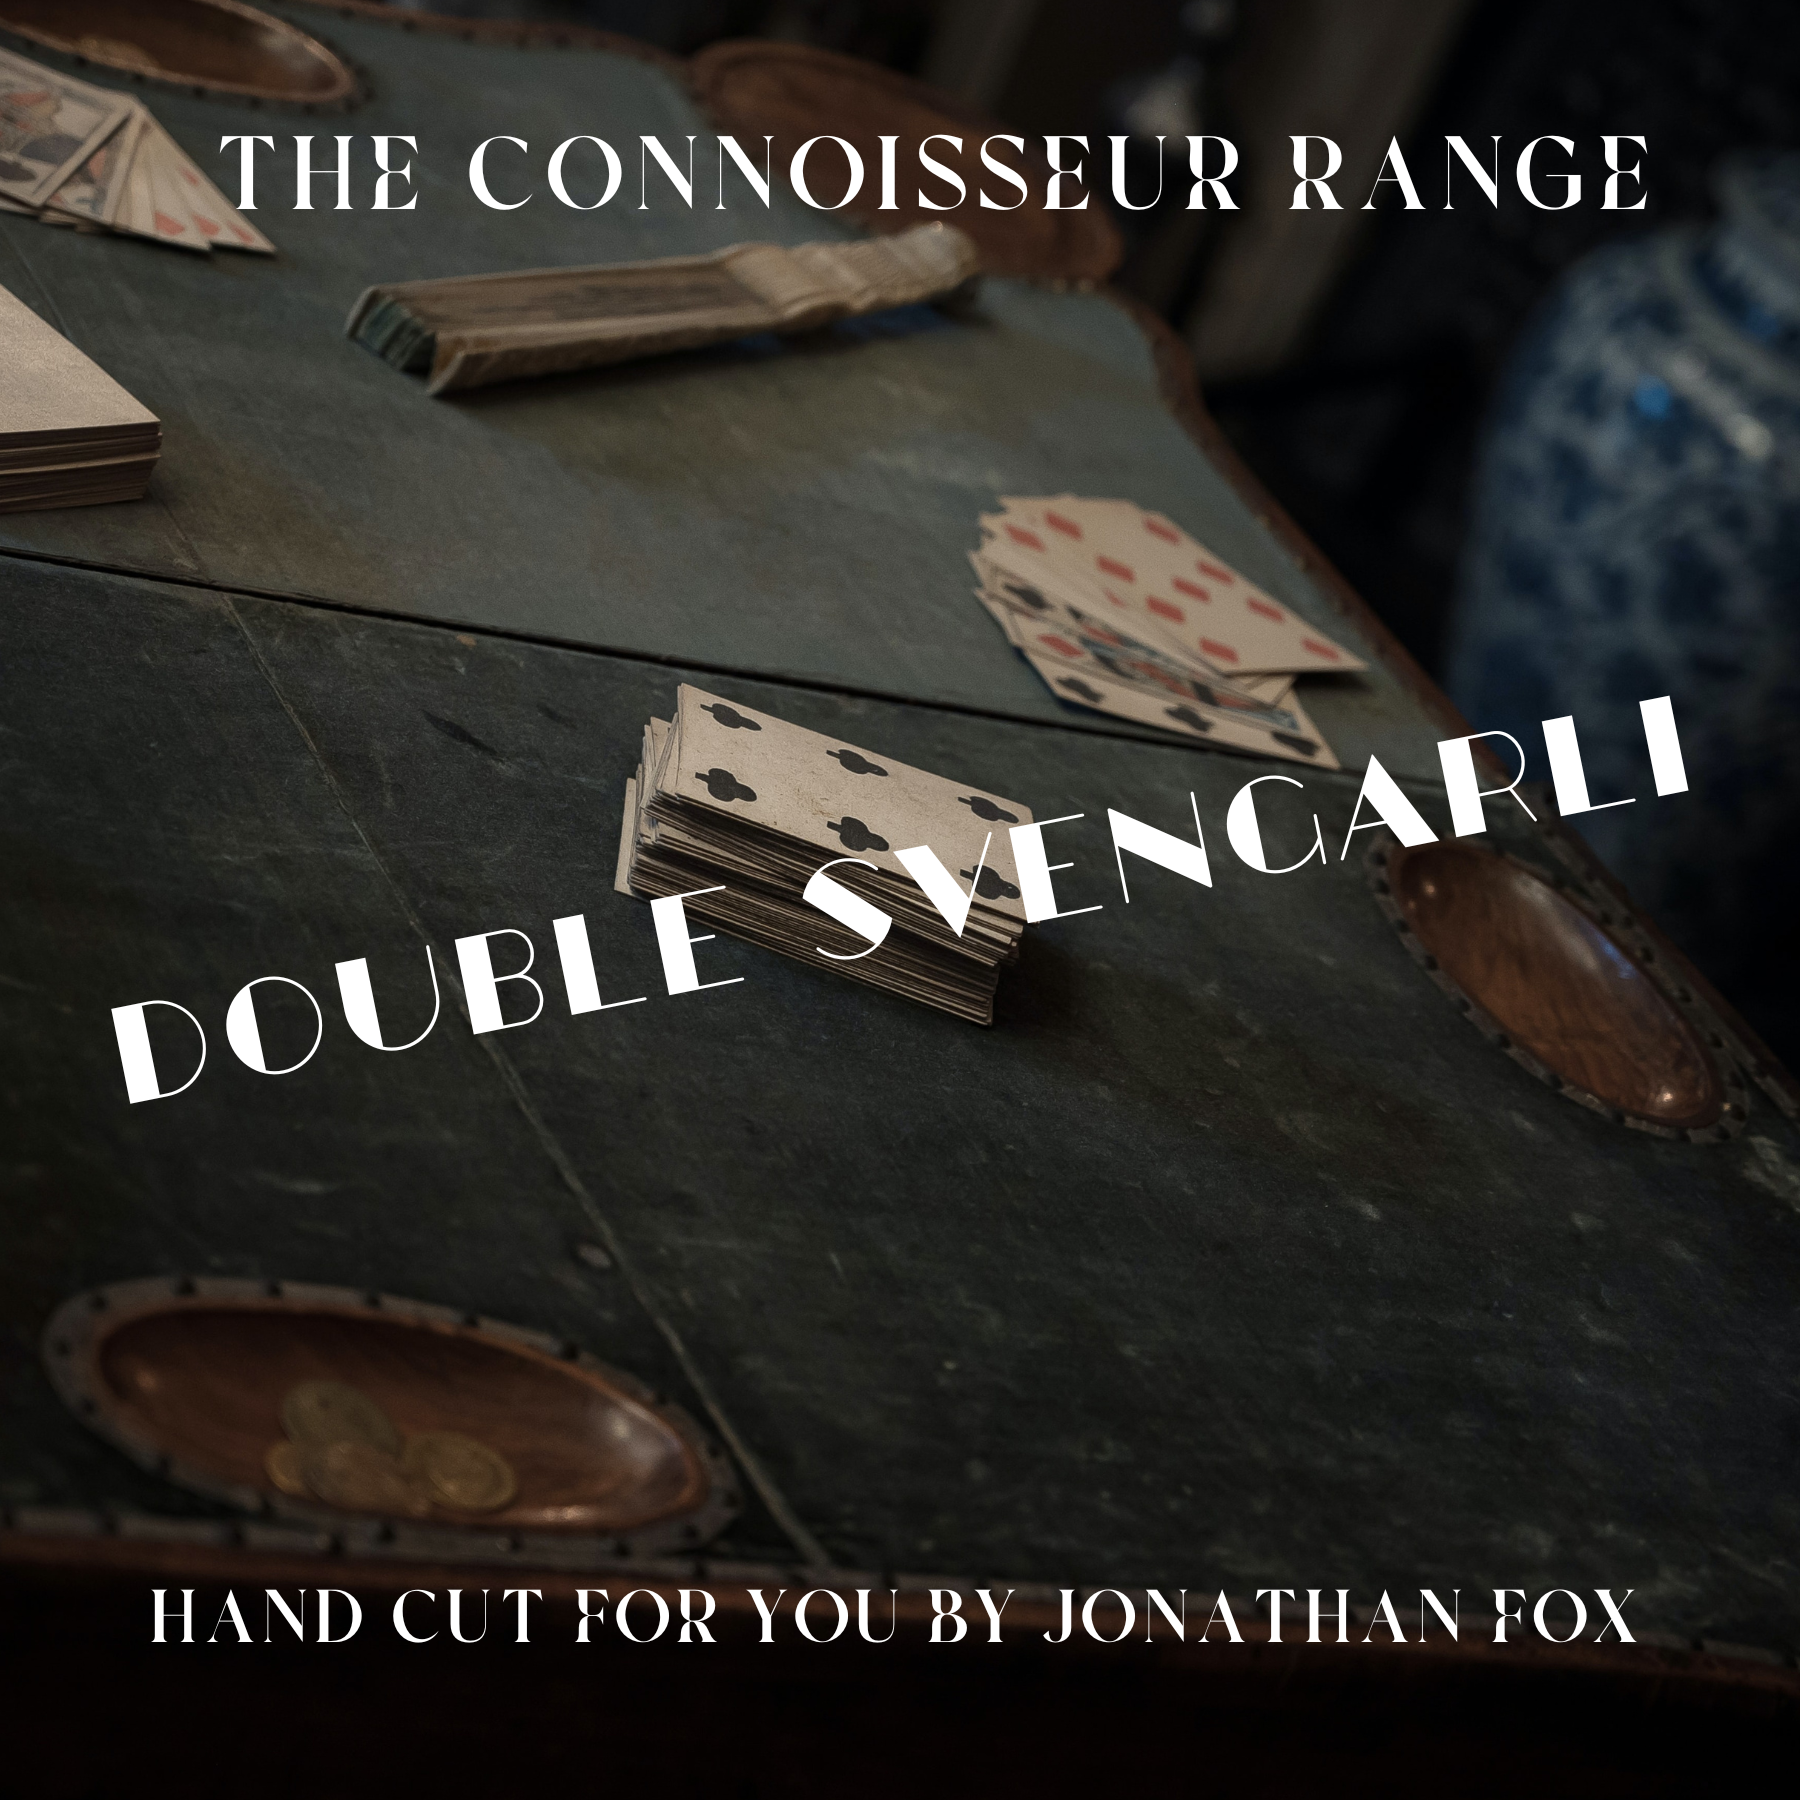 Double Svengarli Deck by Jonathan Fox